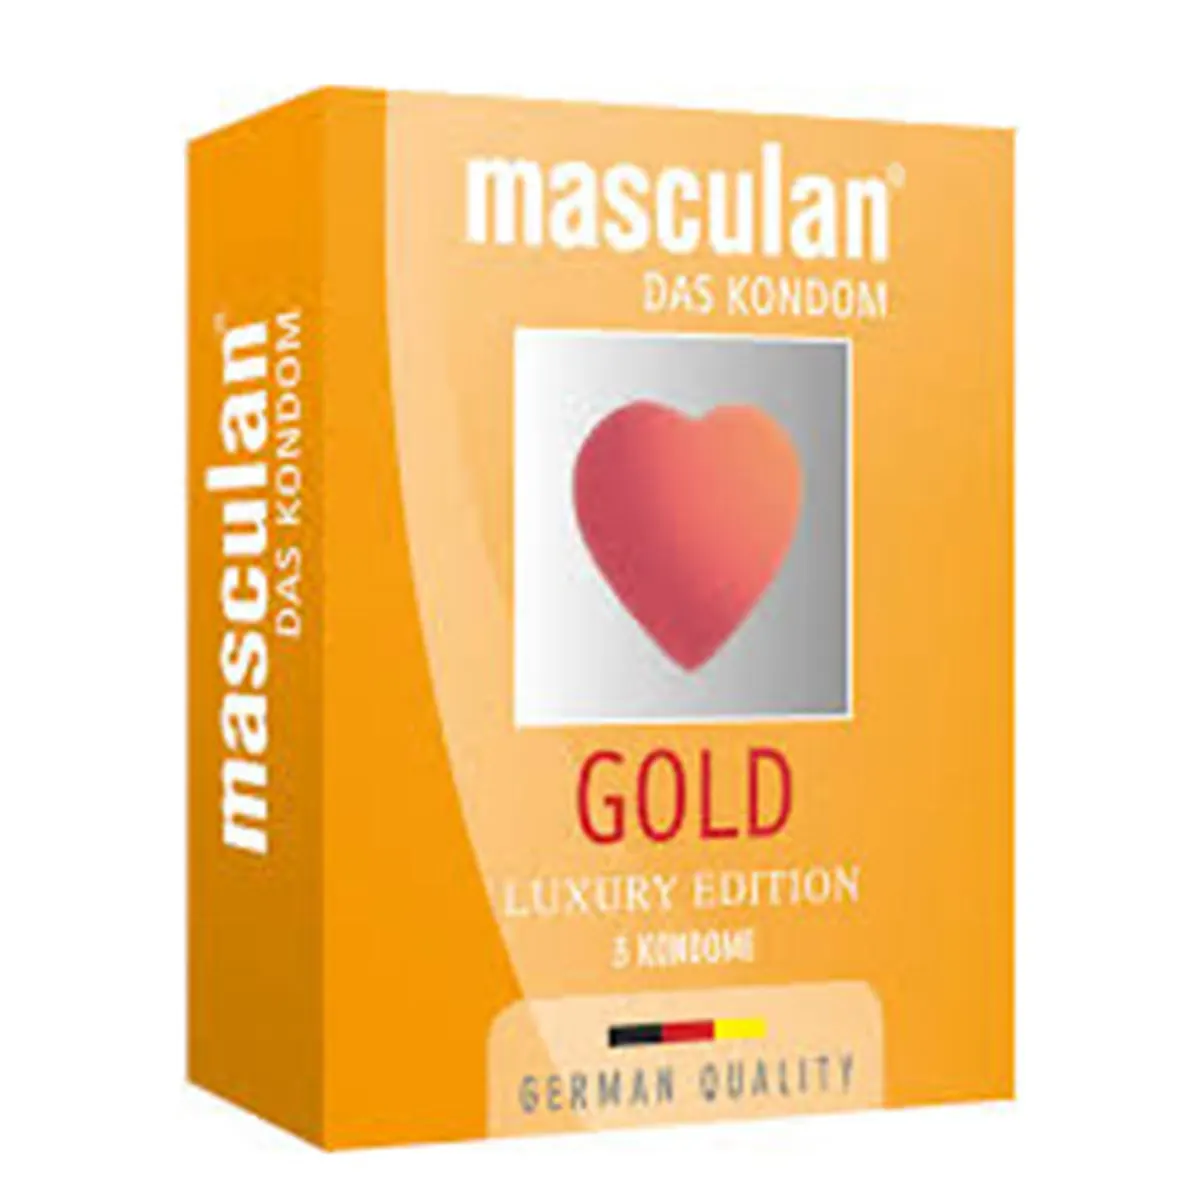 Masculan gold